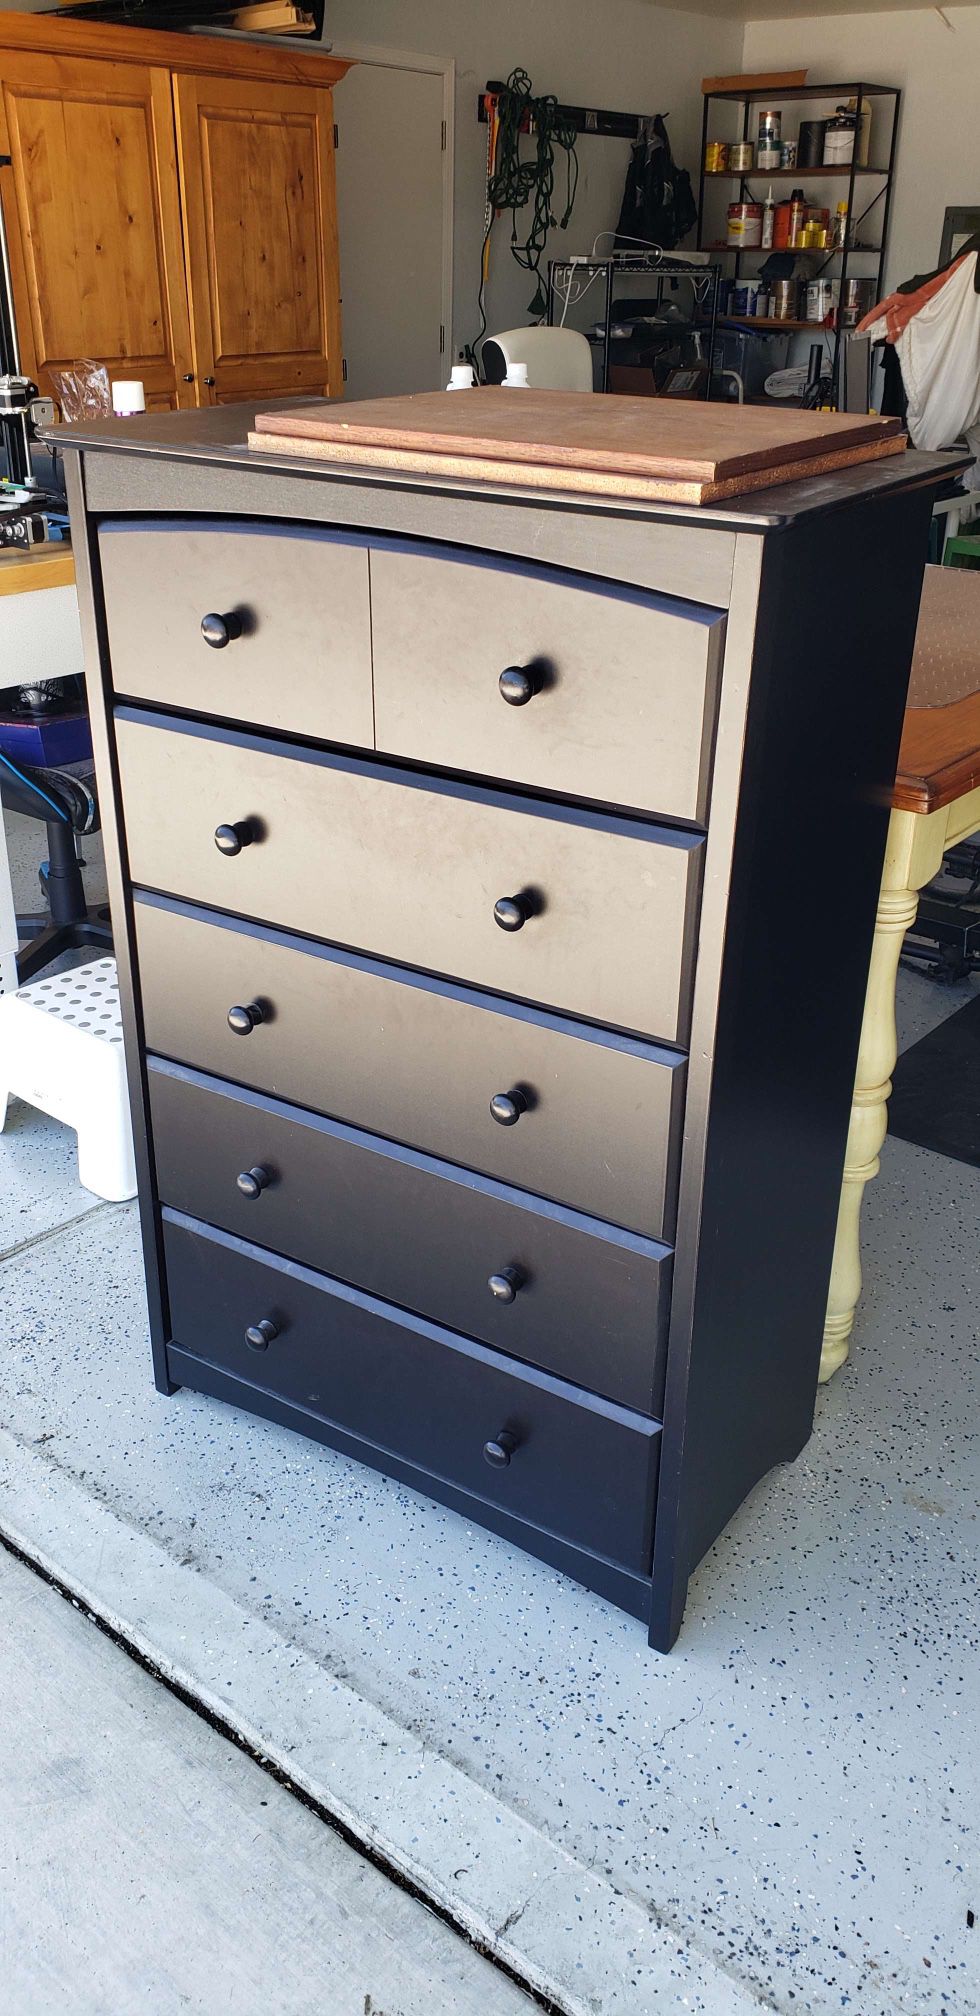 Black Dresser - 5 Drawers - pick up only